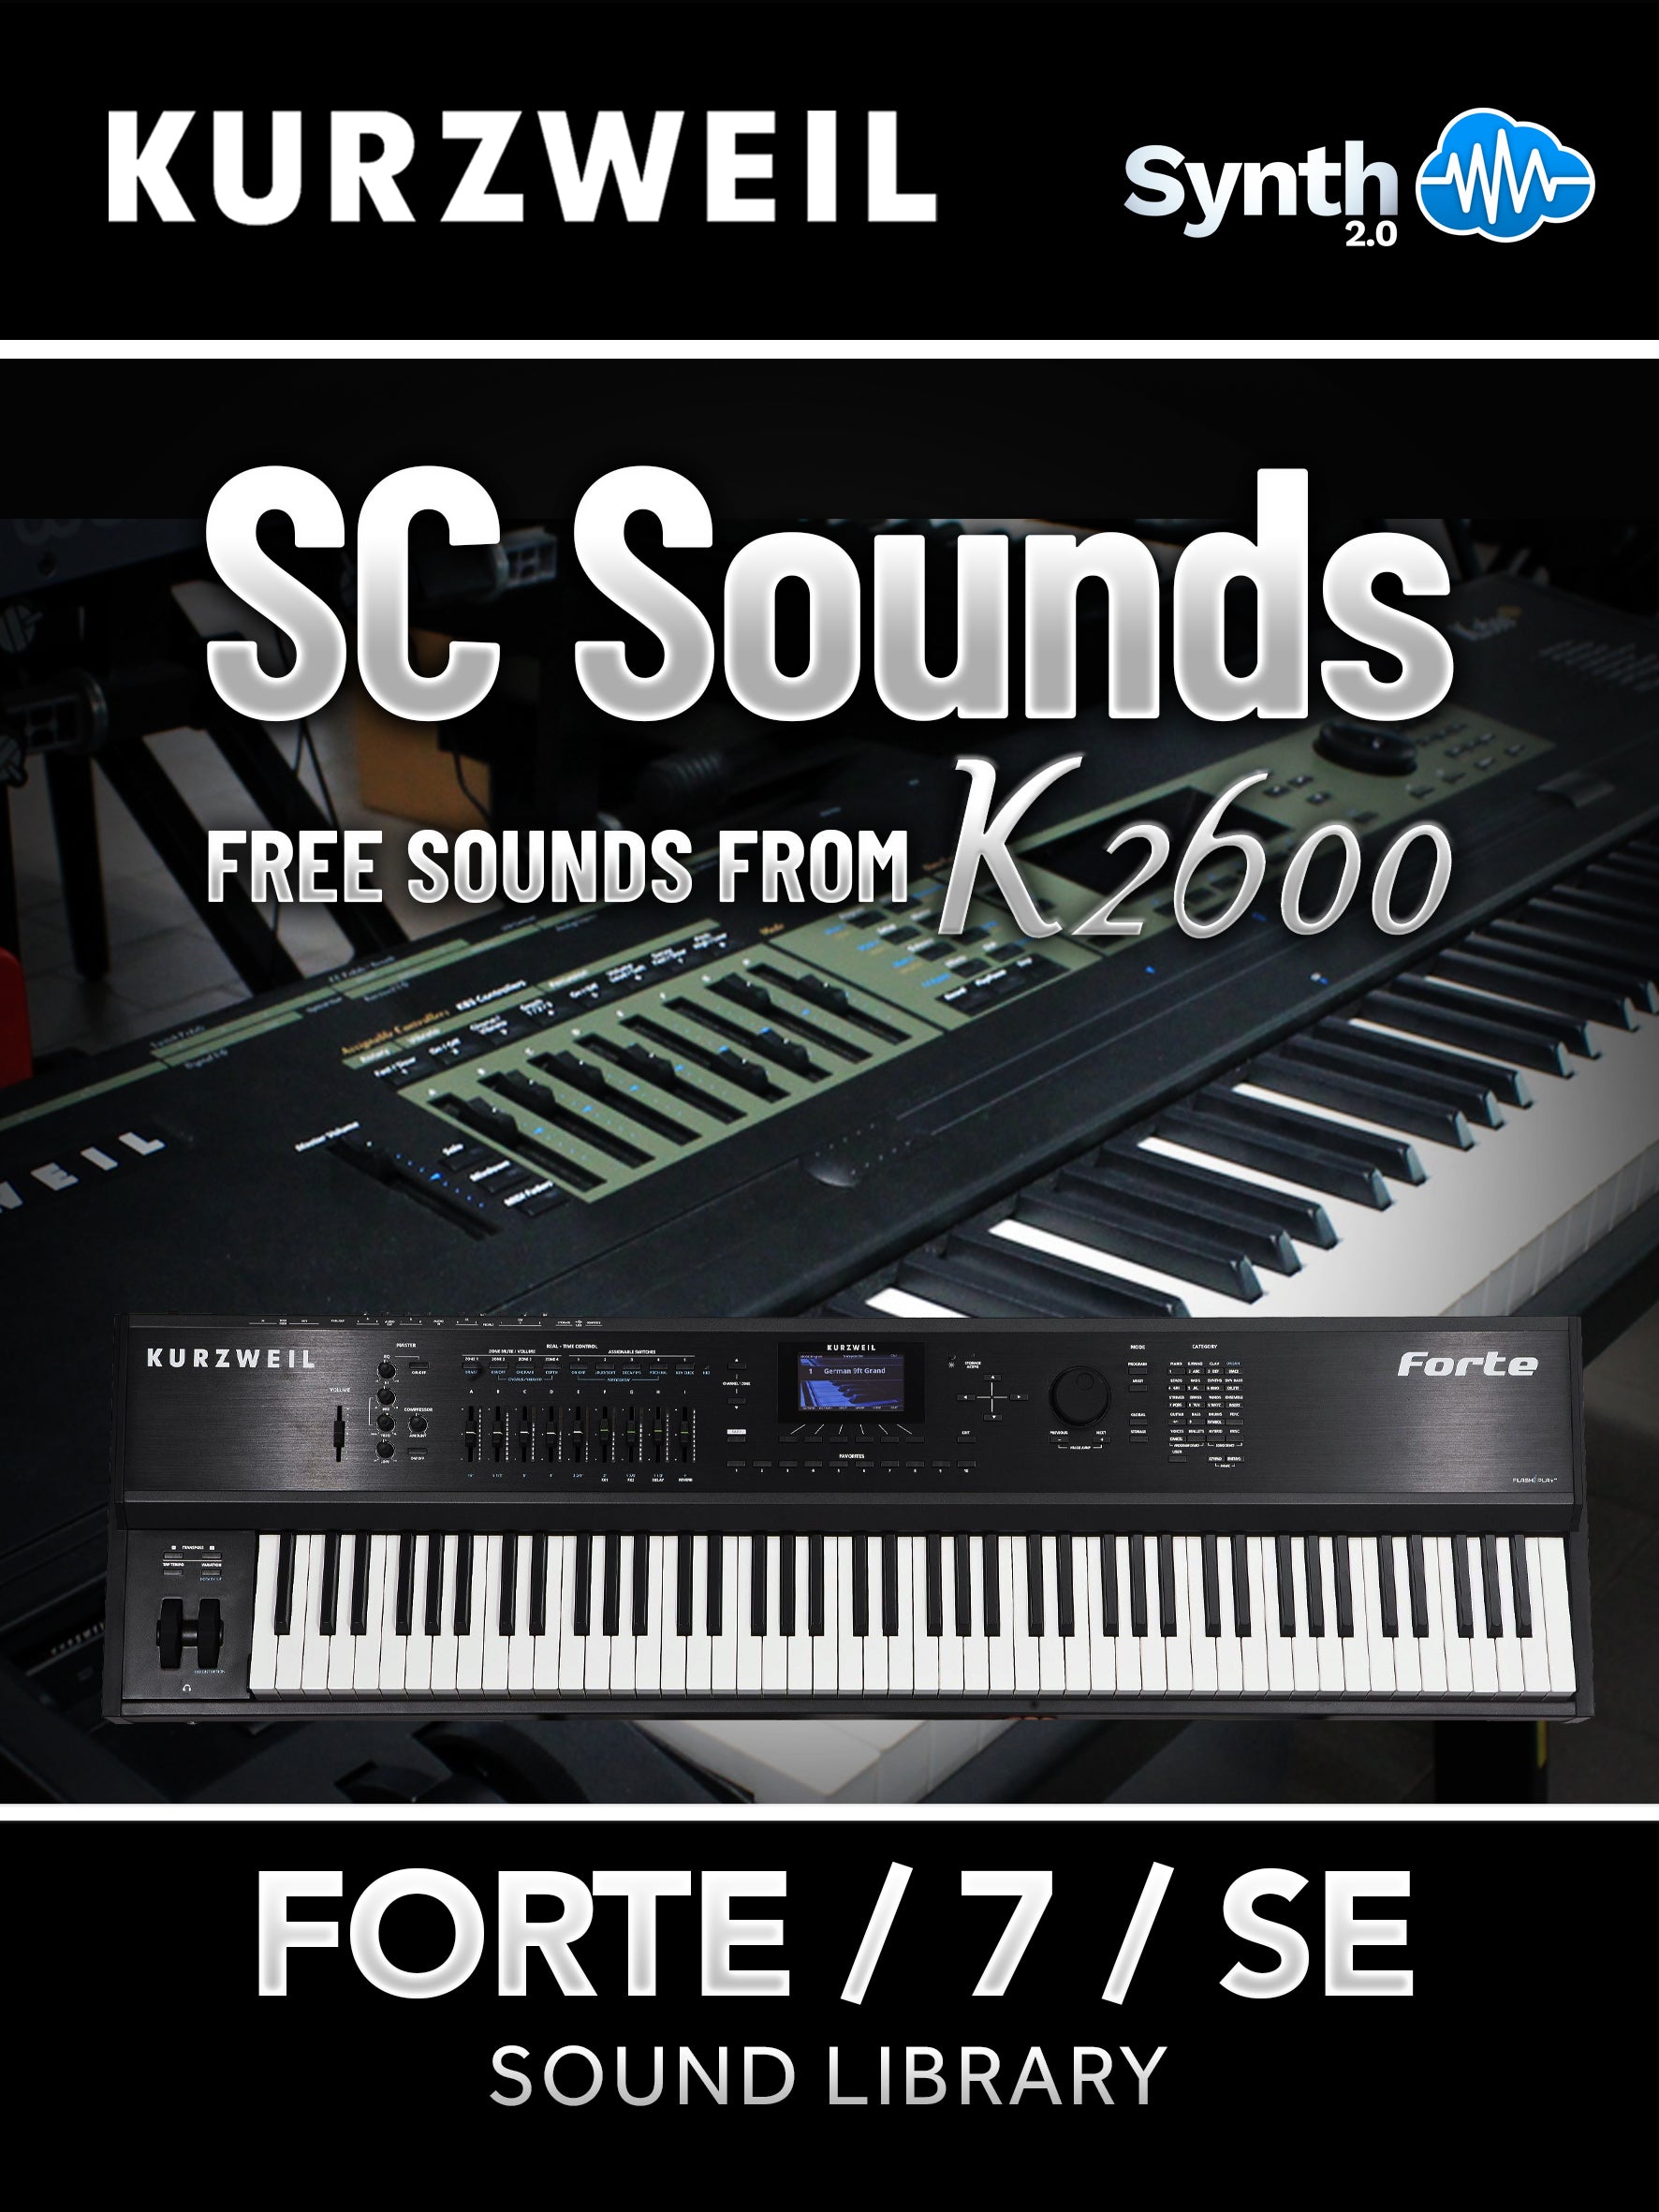 FR005 - SC Sounds Free Sound From K2600 - Kurzweil Forte / 7 / SE ( 40 presets )